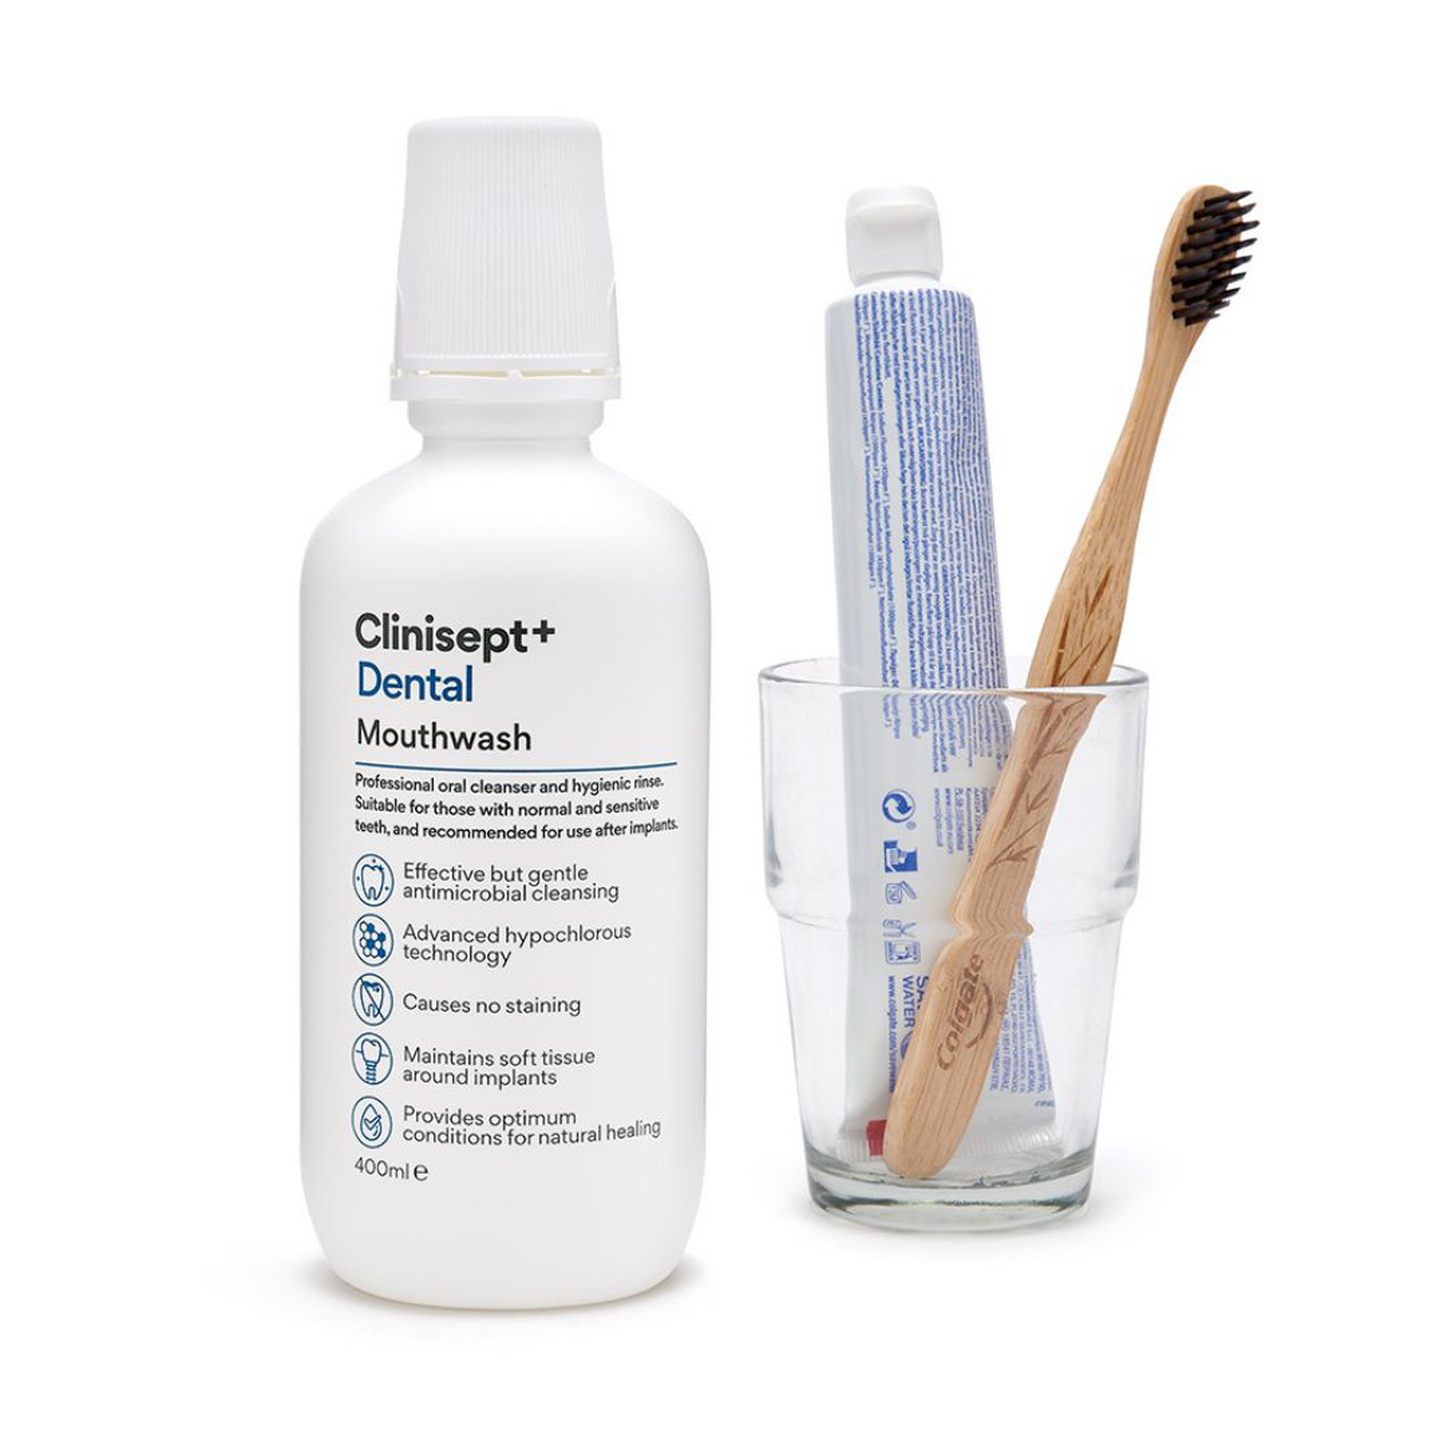 Clinisept+ Dental Mouthwash - 600ml Bottle (For Professional Use)